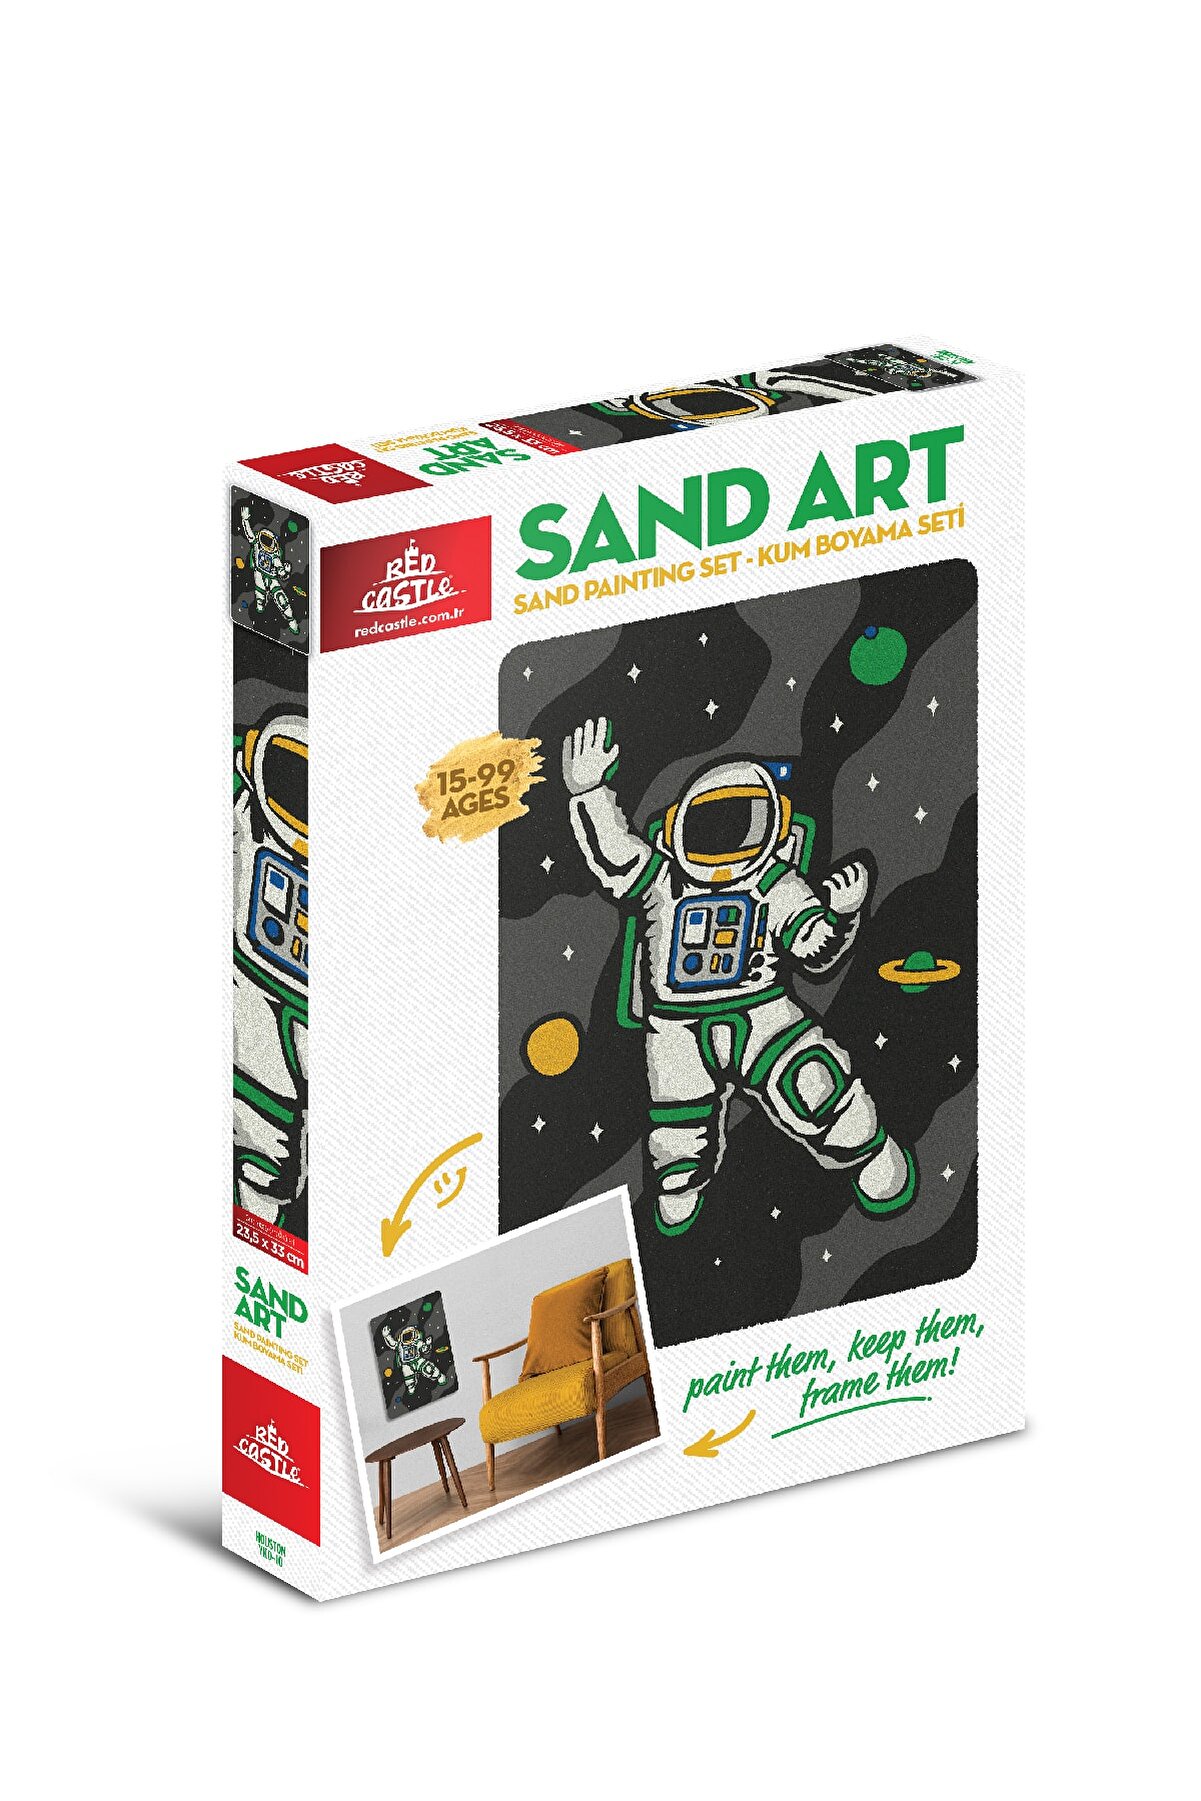 Red Castle Sand Art (KUM SANATI) Astronot, Yetişkin Kum Boyama Aktivite Seti- Yko-10